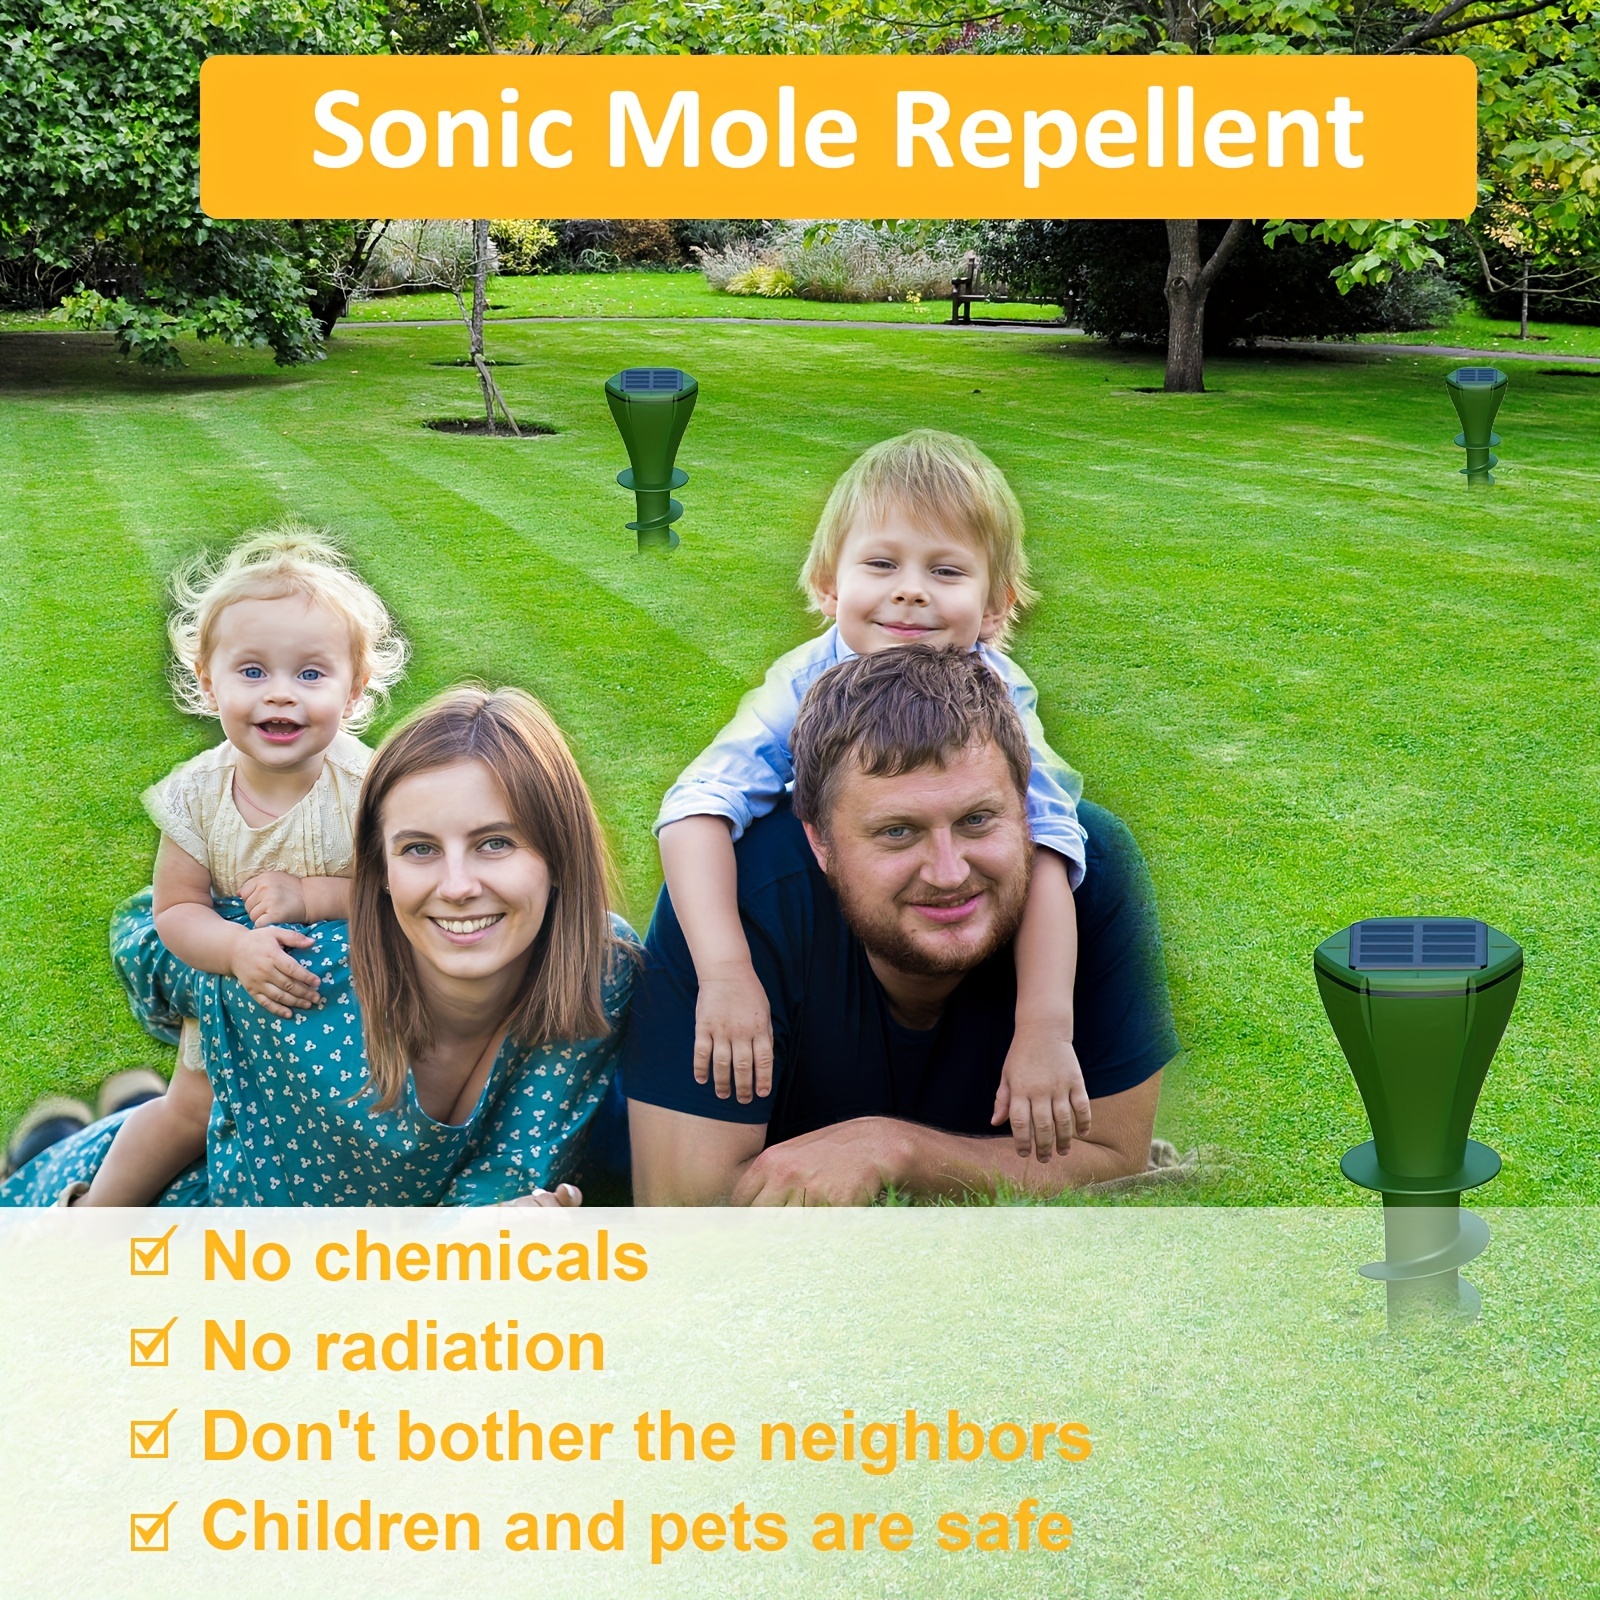 Mole Repellent for Lawns, Sonic Mole Repellent Solar Powered